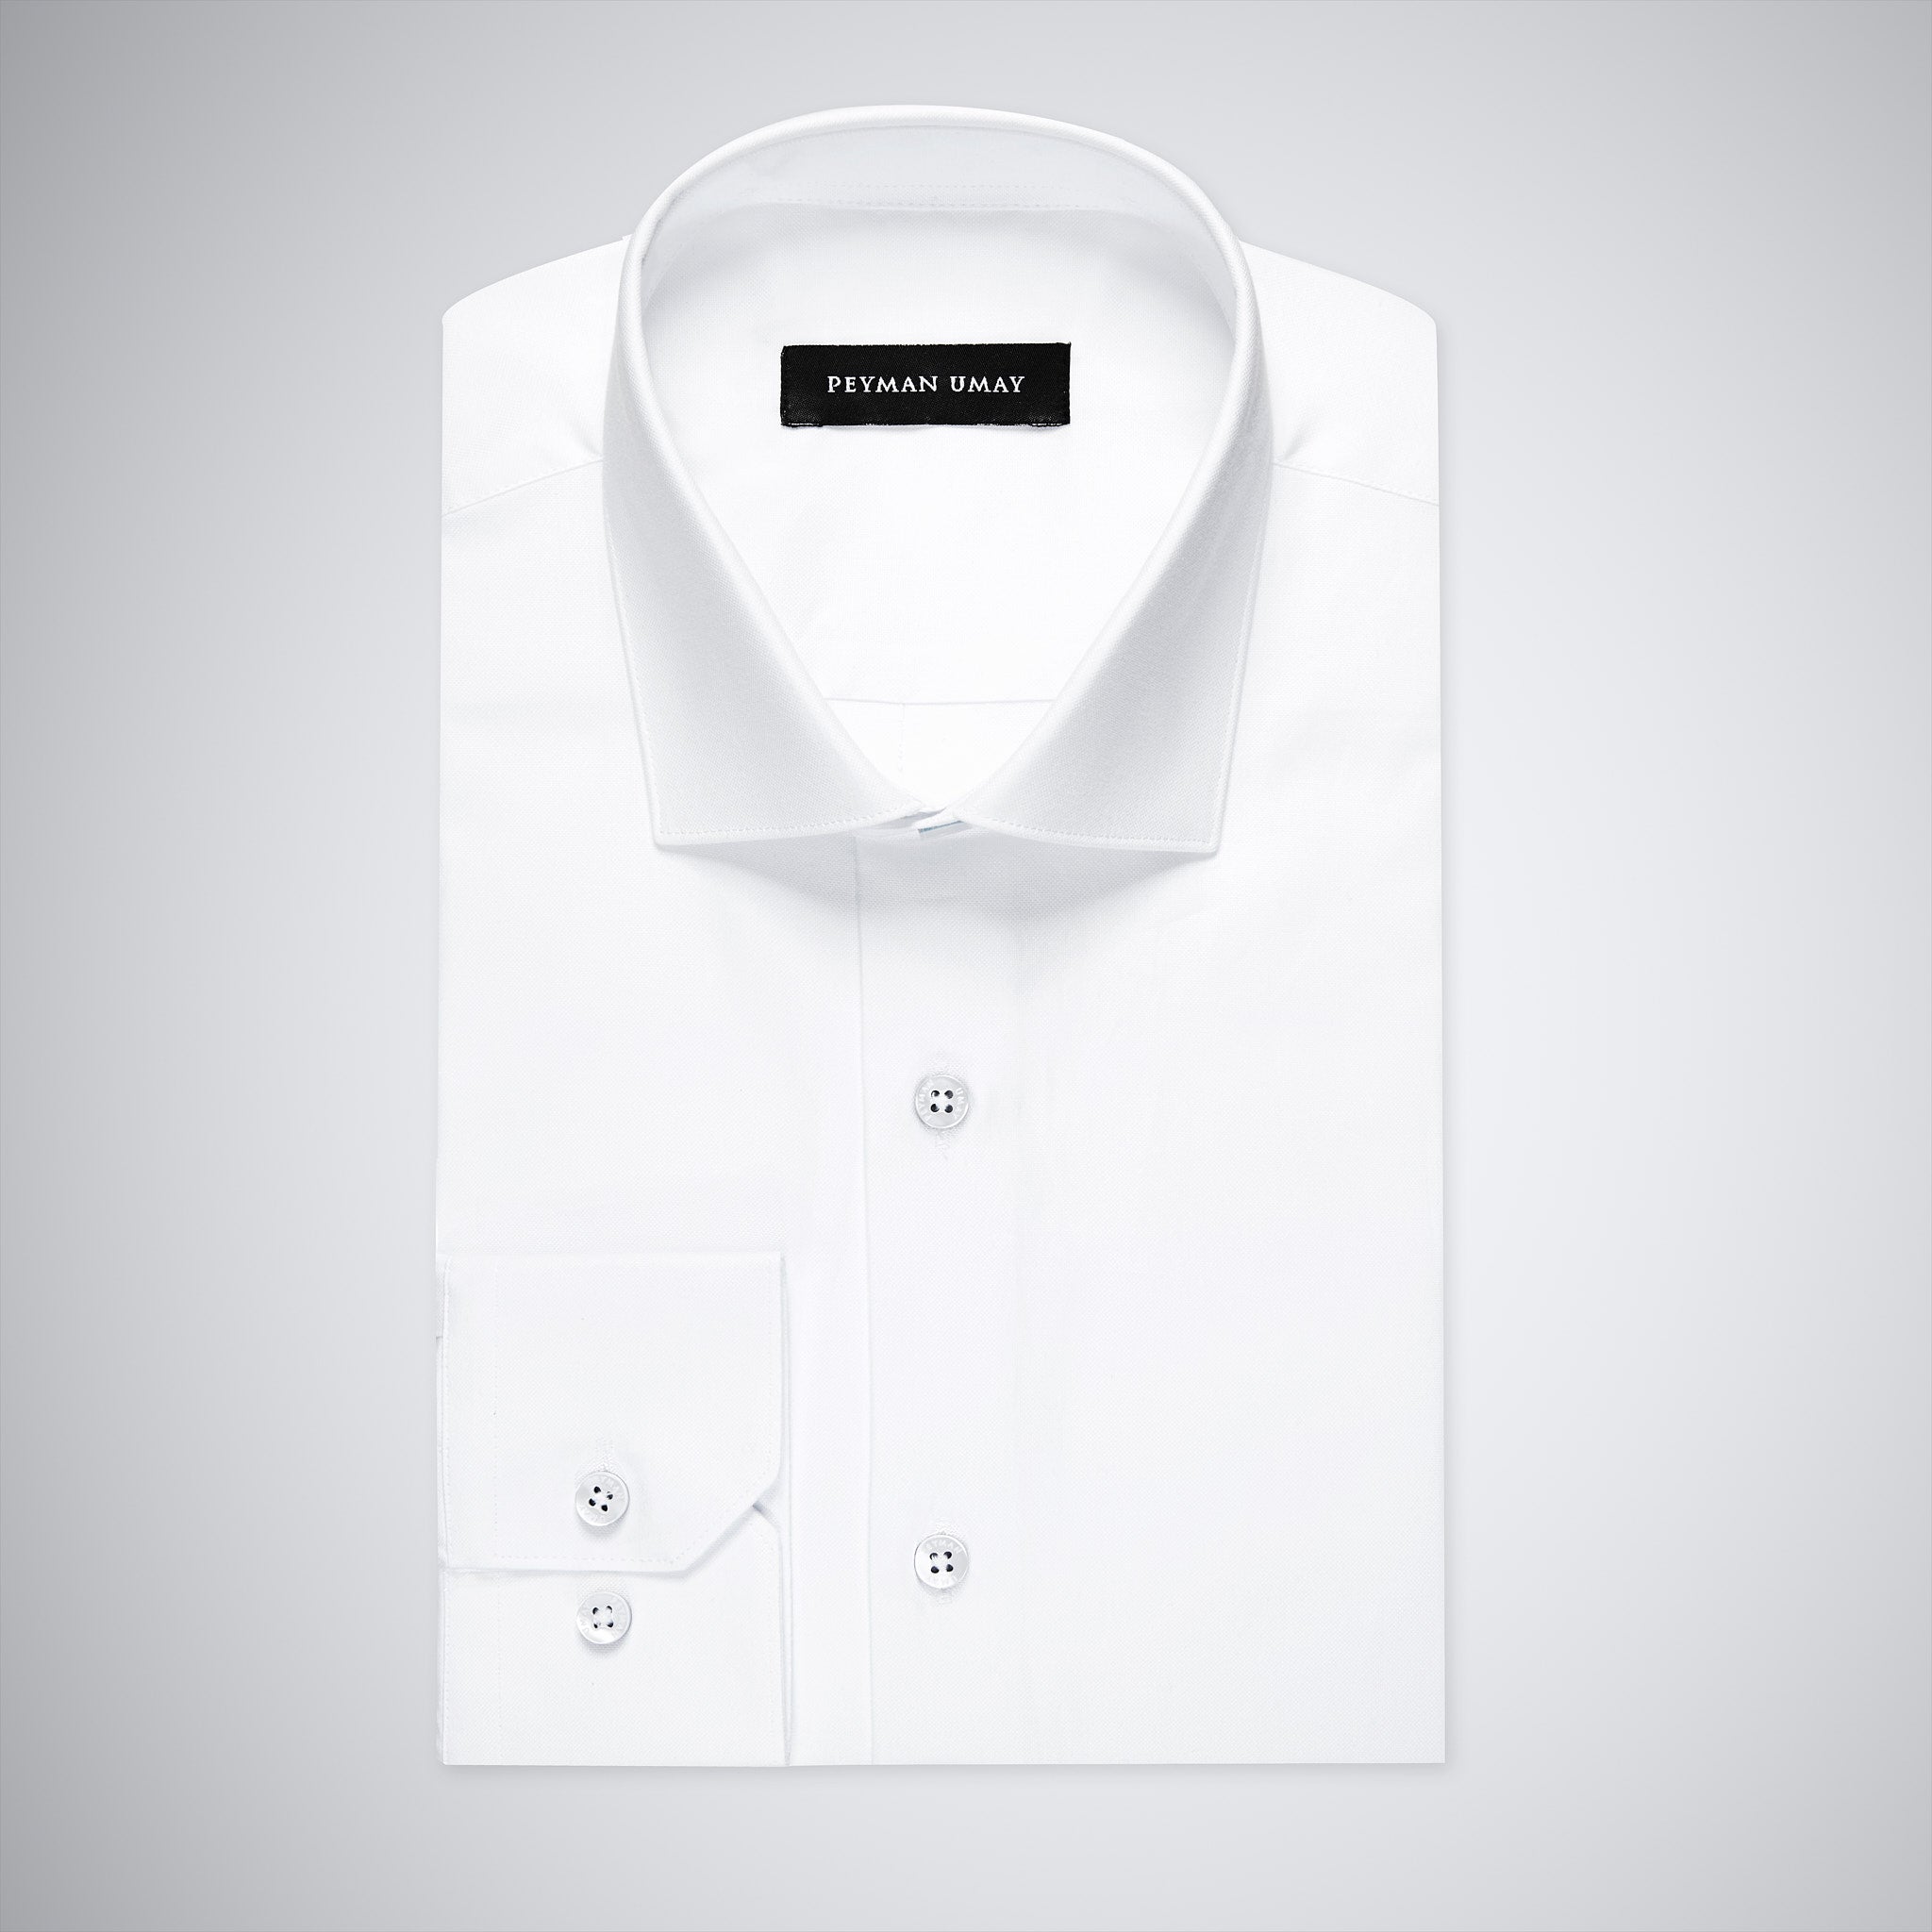 White Oxford Cotton Shirt